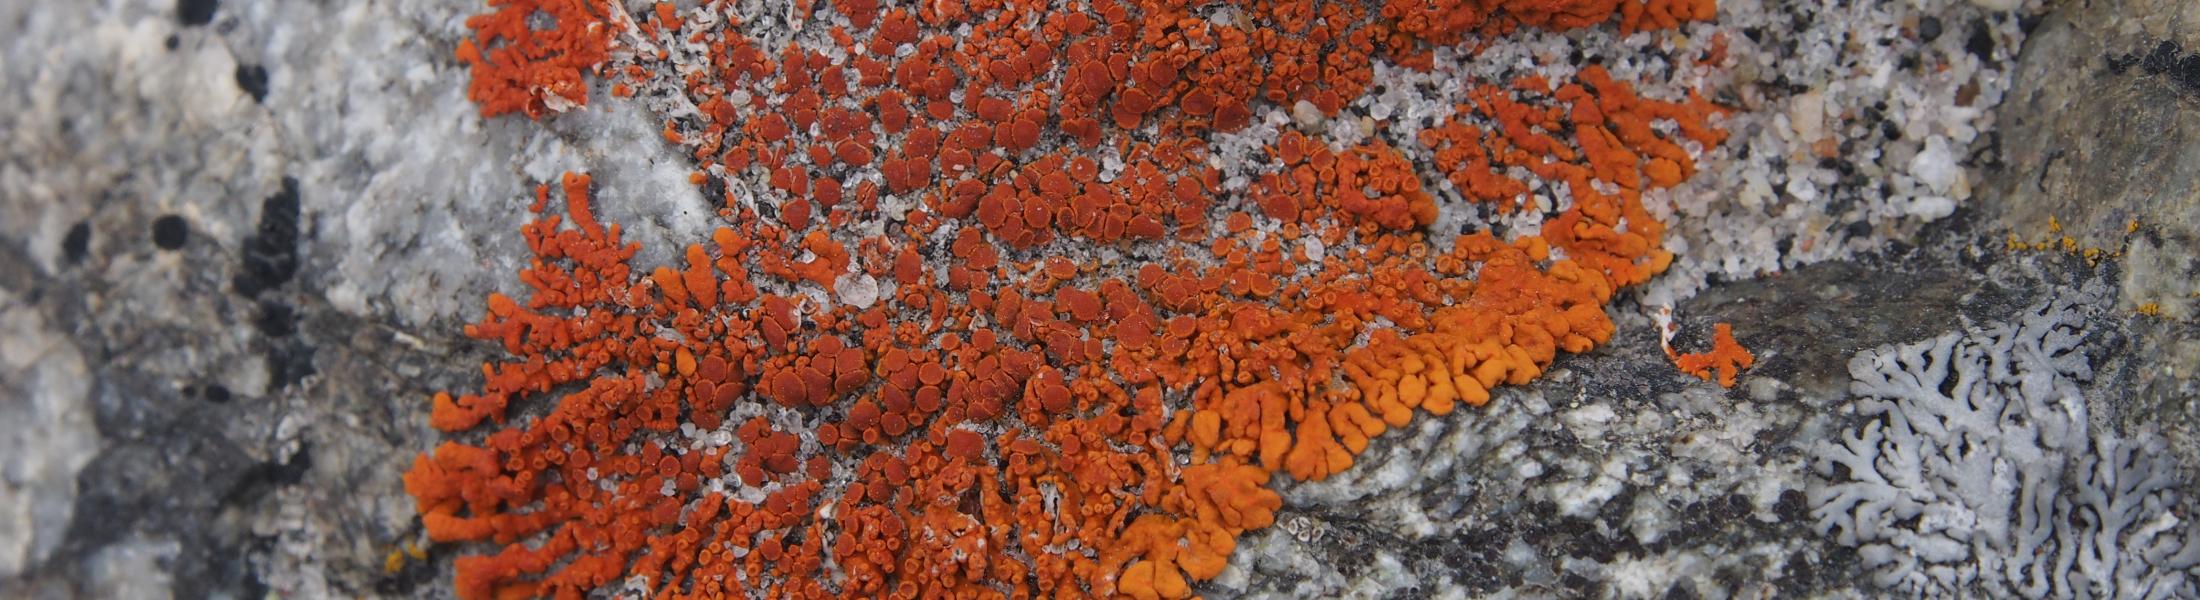 Closeup of lichen on rock